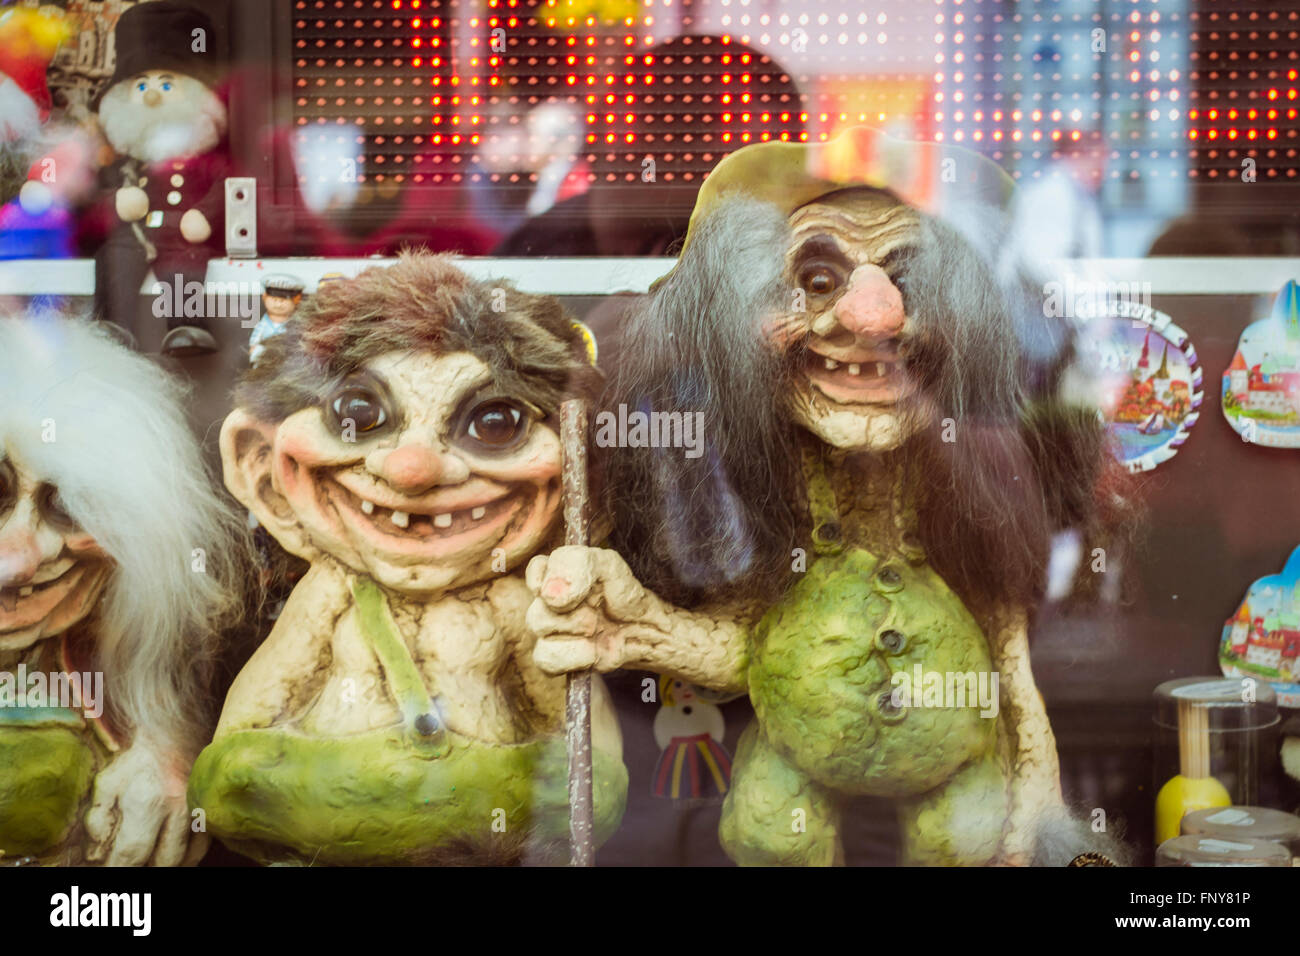 TALLINN, ESTONIA - YUNI 12, 2015: Toy trolls and witches in a shop window on one of the Central streets, Tallinn, Estonia Stock Photo